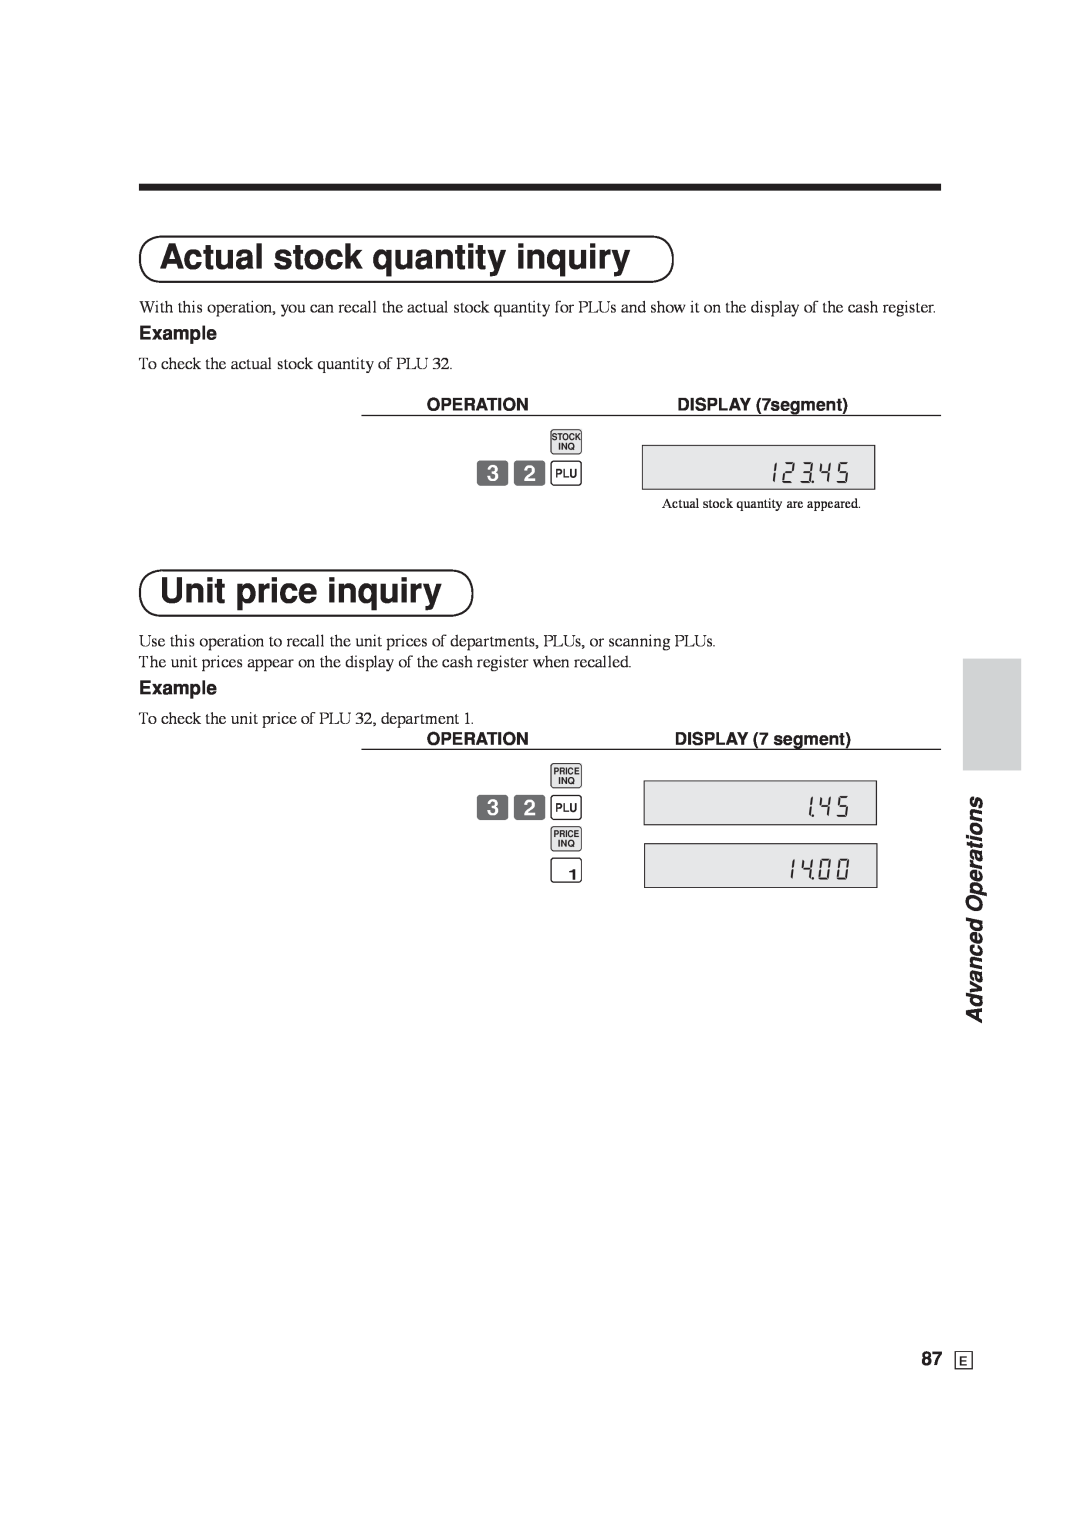 Casio SE-C6000 Actual stock quantity inquiry, Unit price inquiry, 12#45, 1$00, 87 E, Advanced Operations, Example 